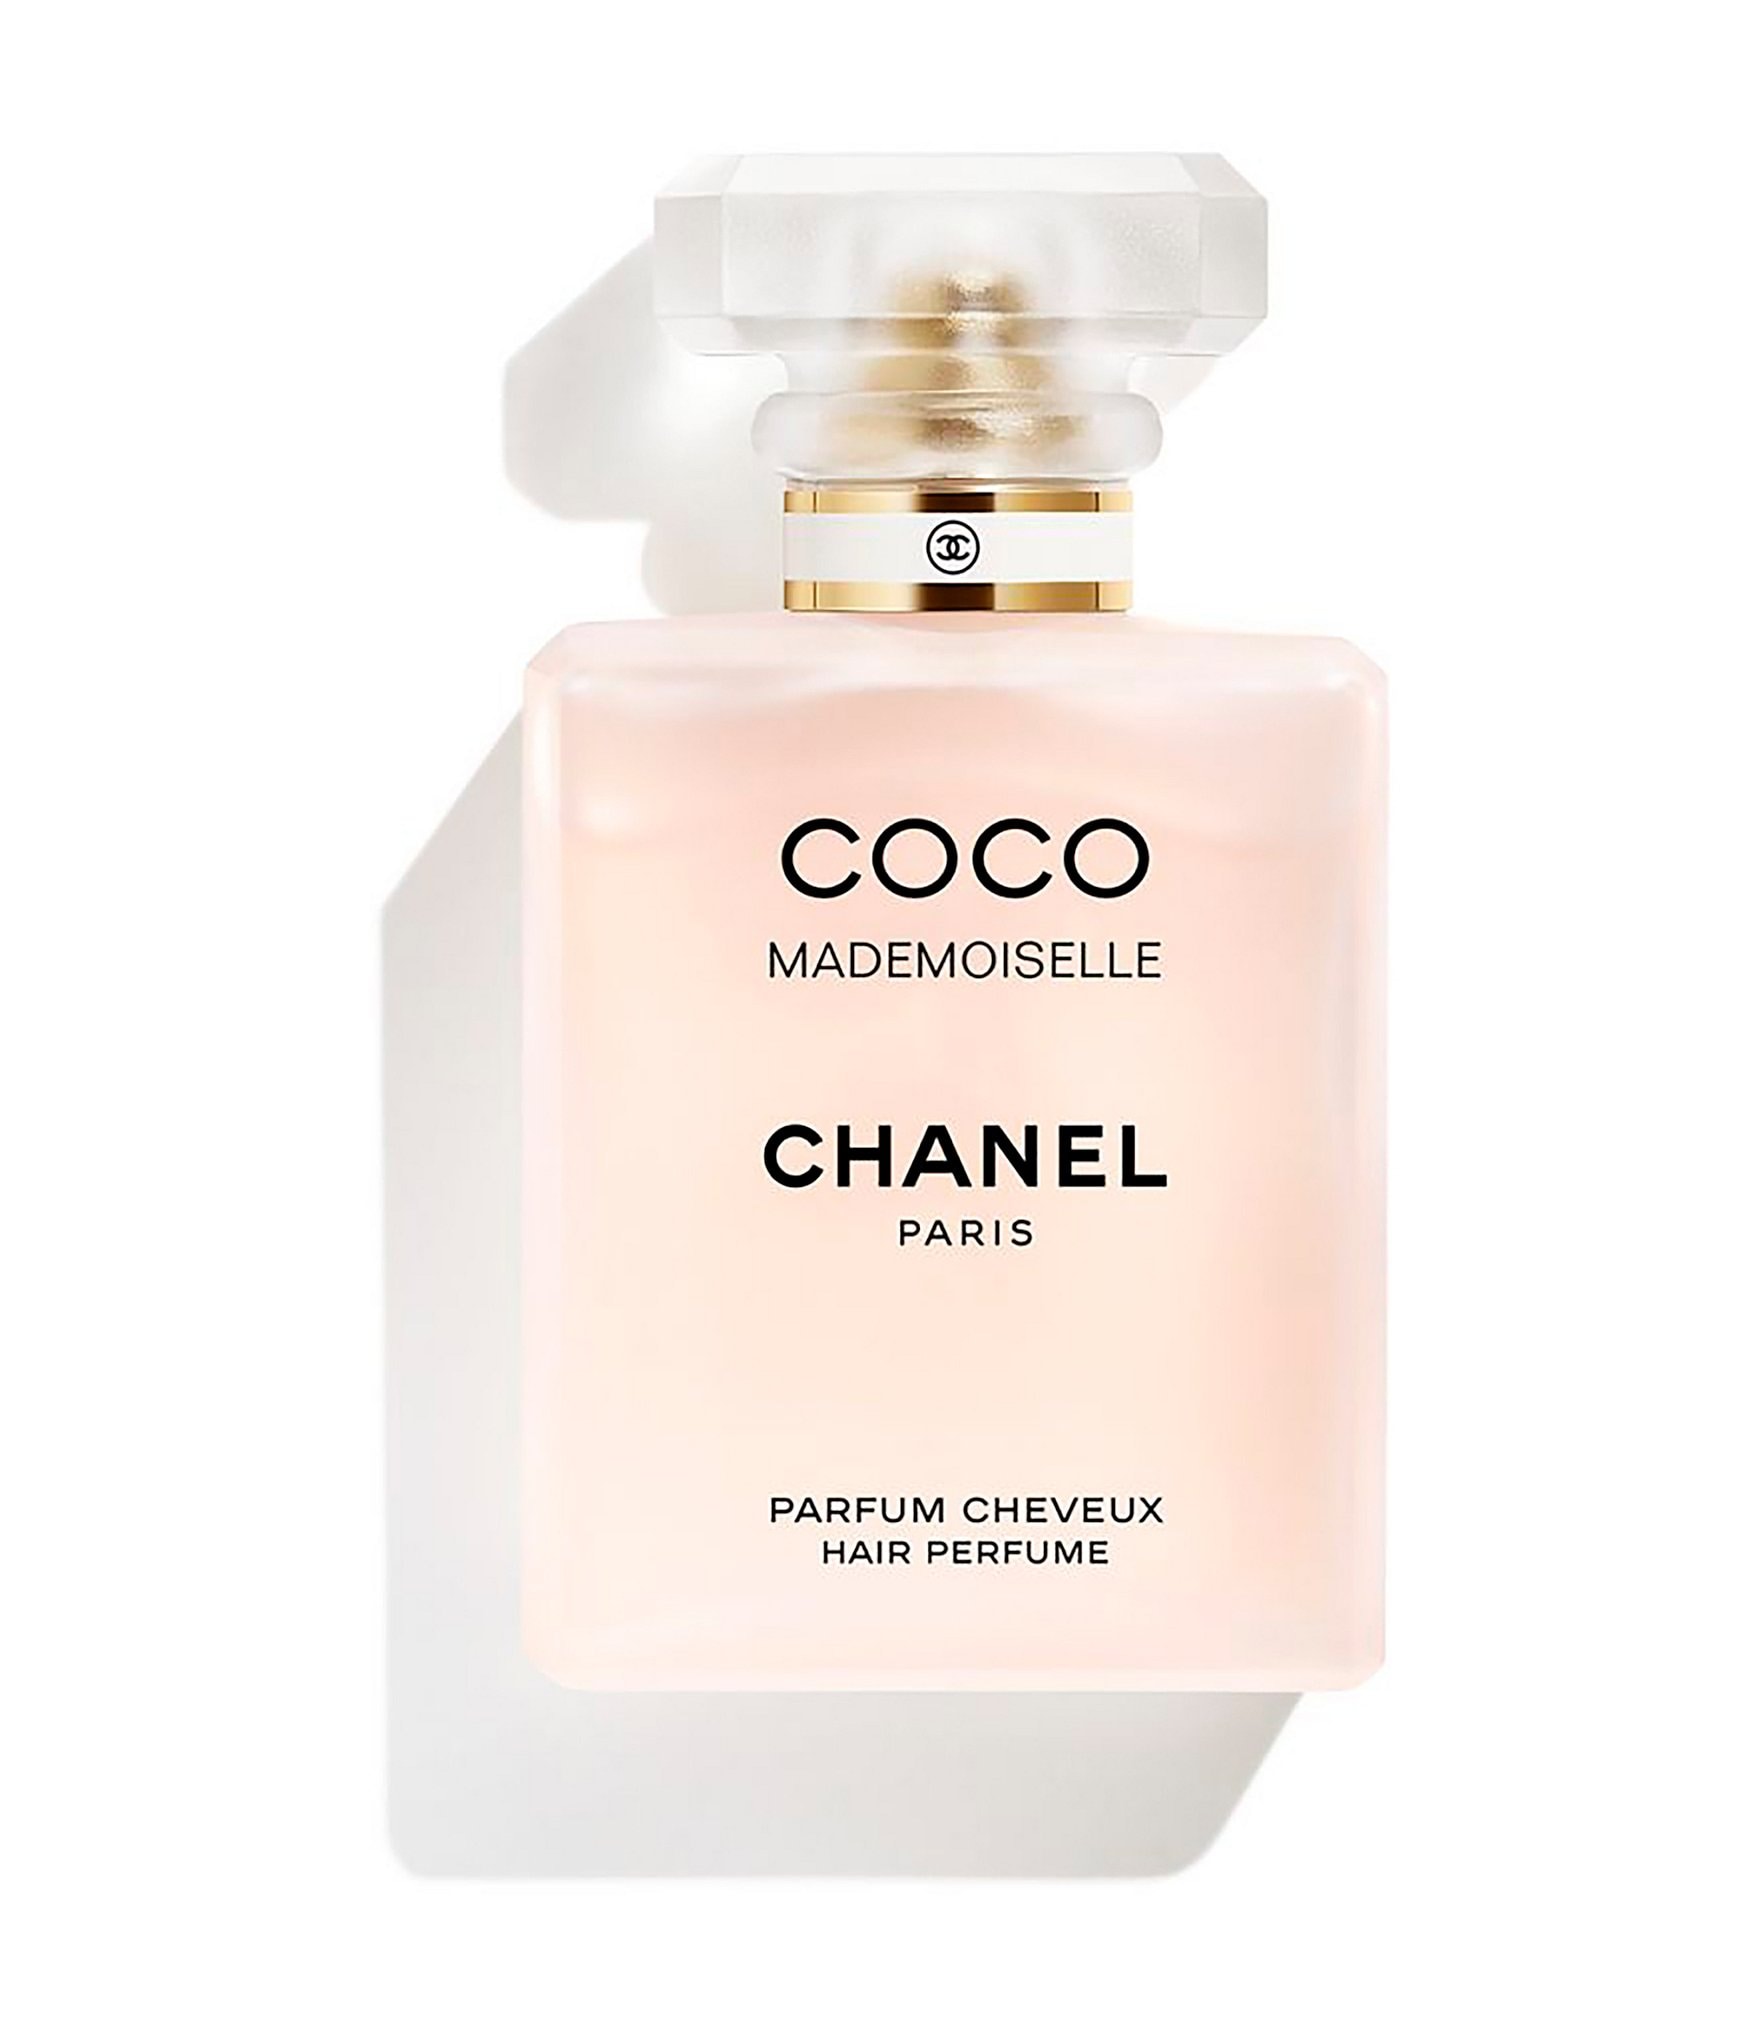 chanel moisturizing body lotion, 6.8-oz coco mademoiselle